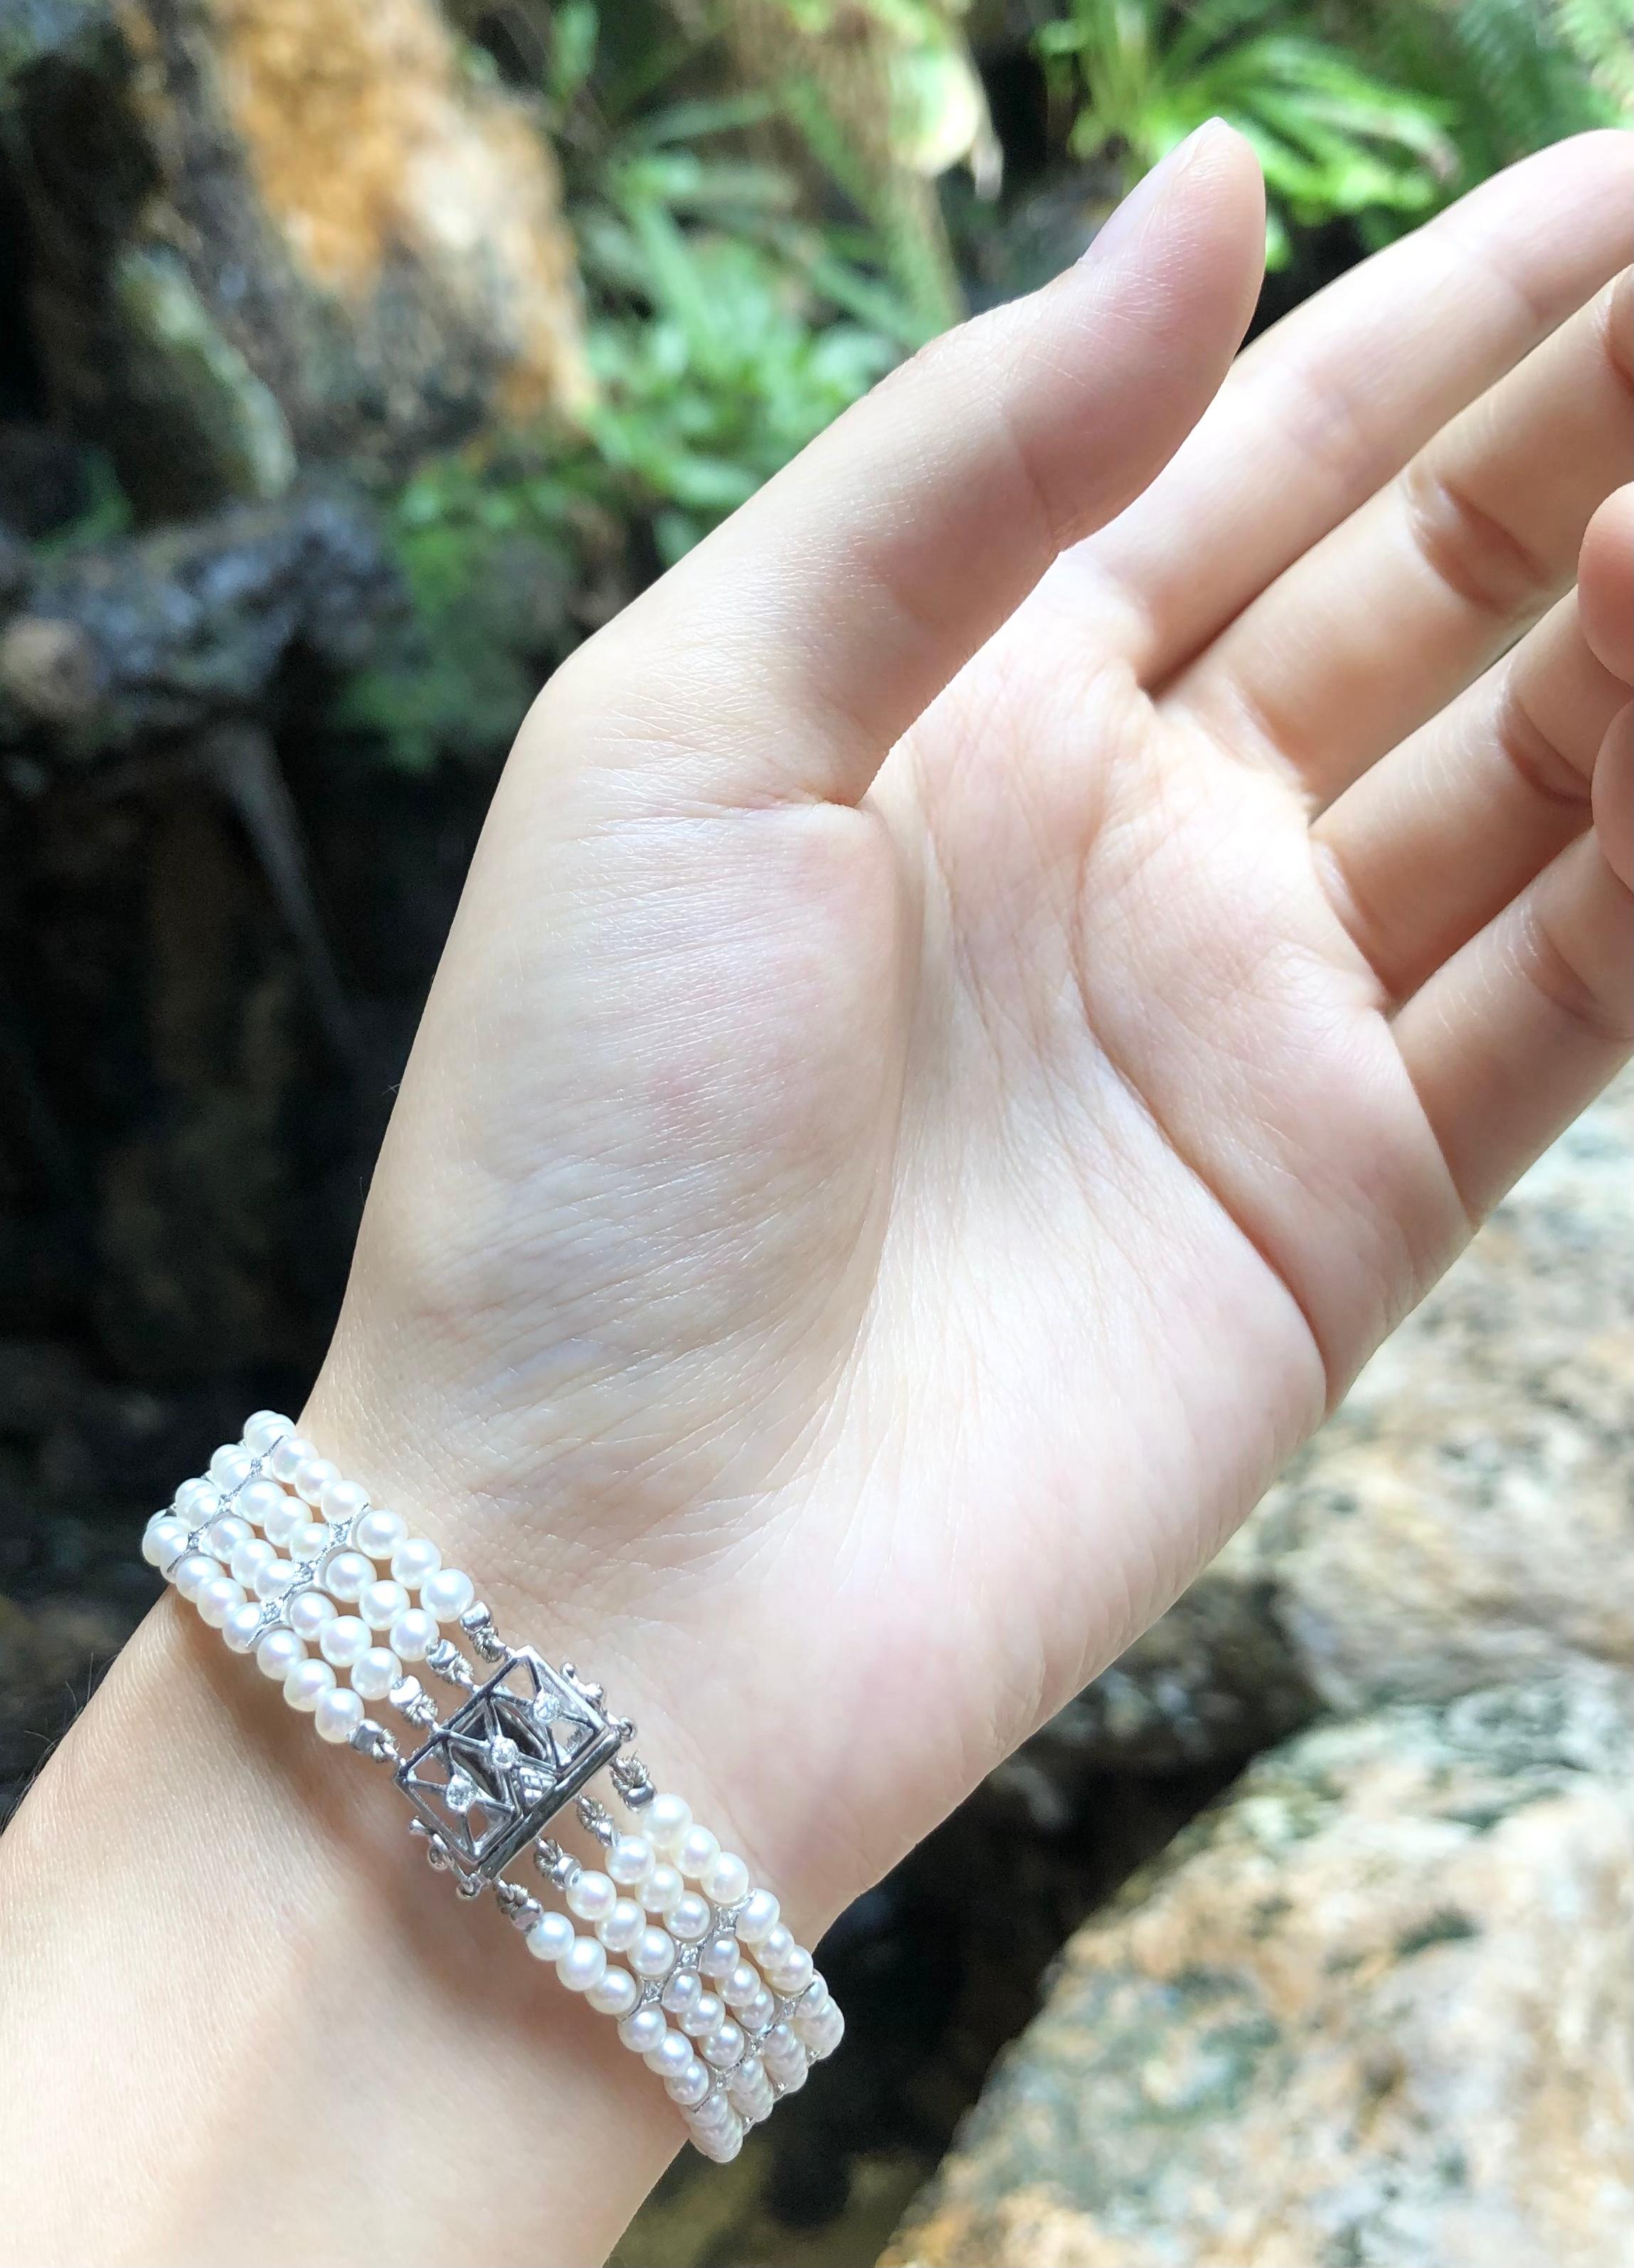 Fresh Water Pearl with Diamond 0.75 carat Bracelet set in 18 Karat White Gold Settings

Width: 1.6 cm 
Length: 16.5 cm (6.5